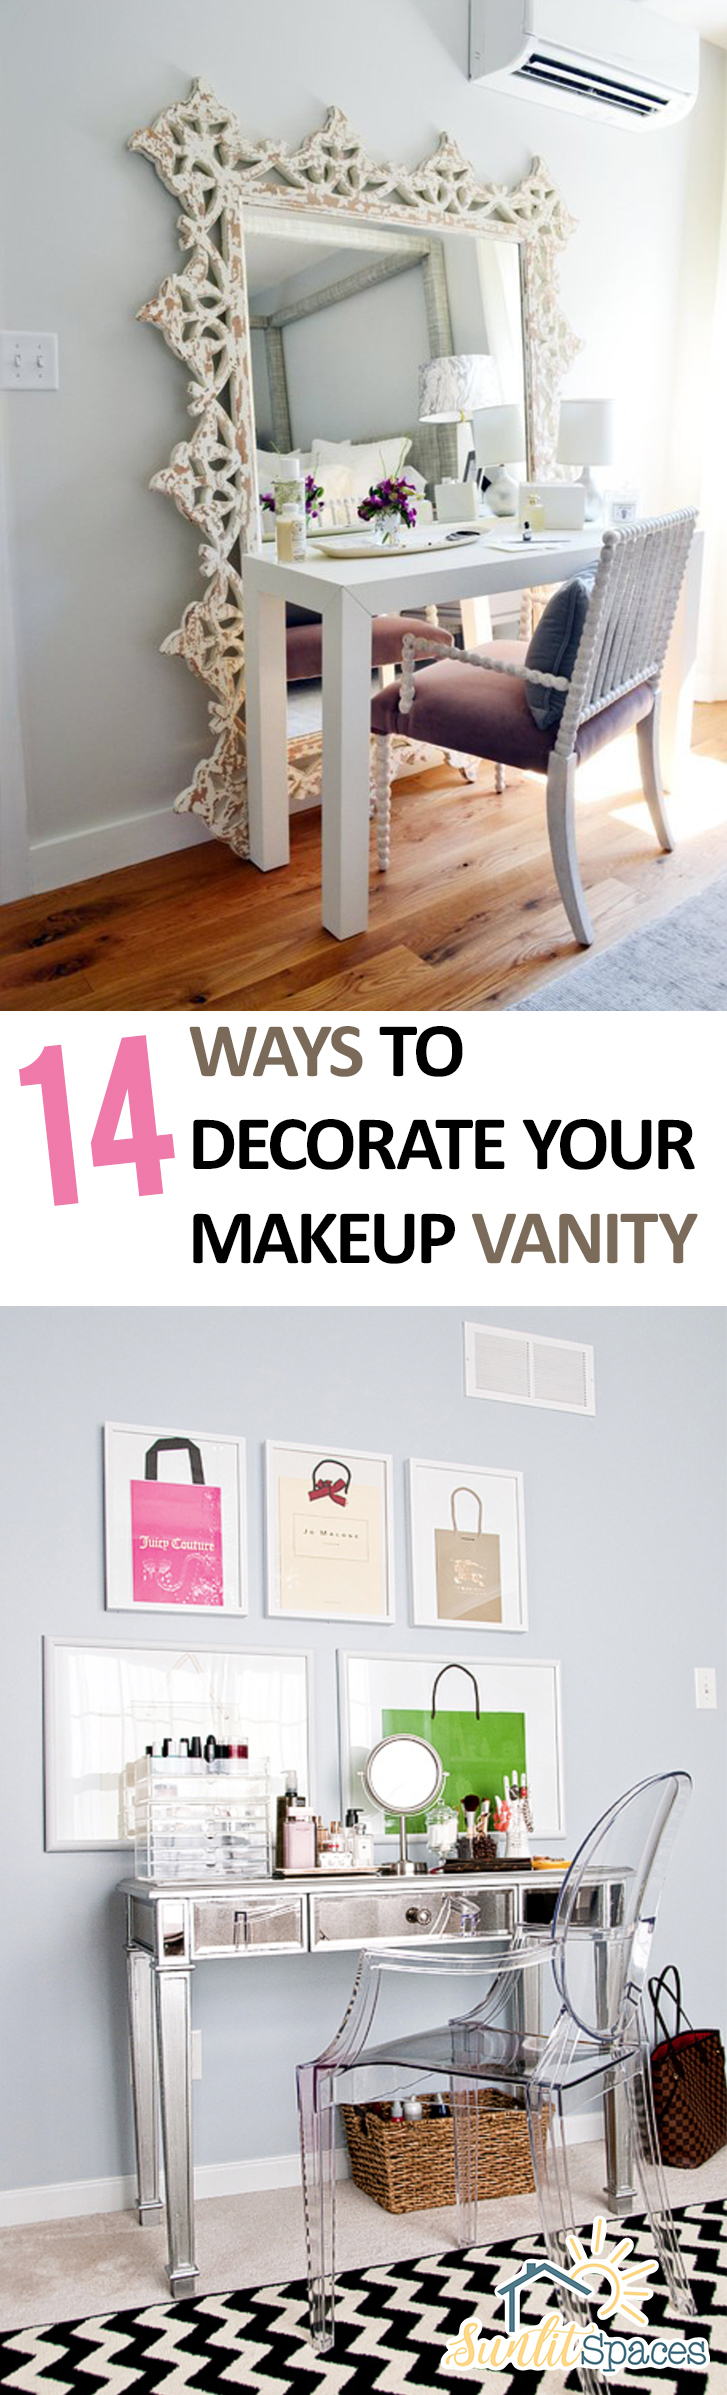 Makeup Vanity, How to Decorate Your Makeup Vanity, Home Decor Ideas, DIY Makeup Vanity, Makeup Vanity Ideas, Makeup Tips and Tricks, Decorating, Bathroom Decor, Popular Pin